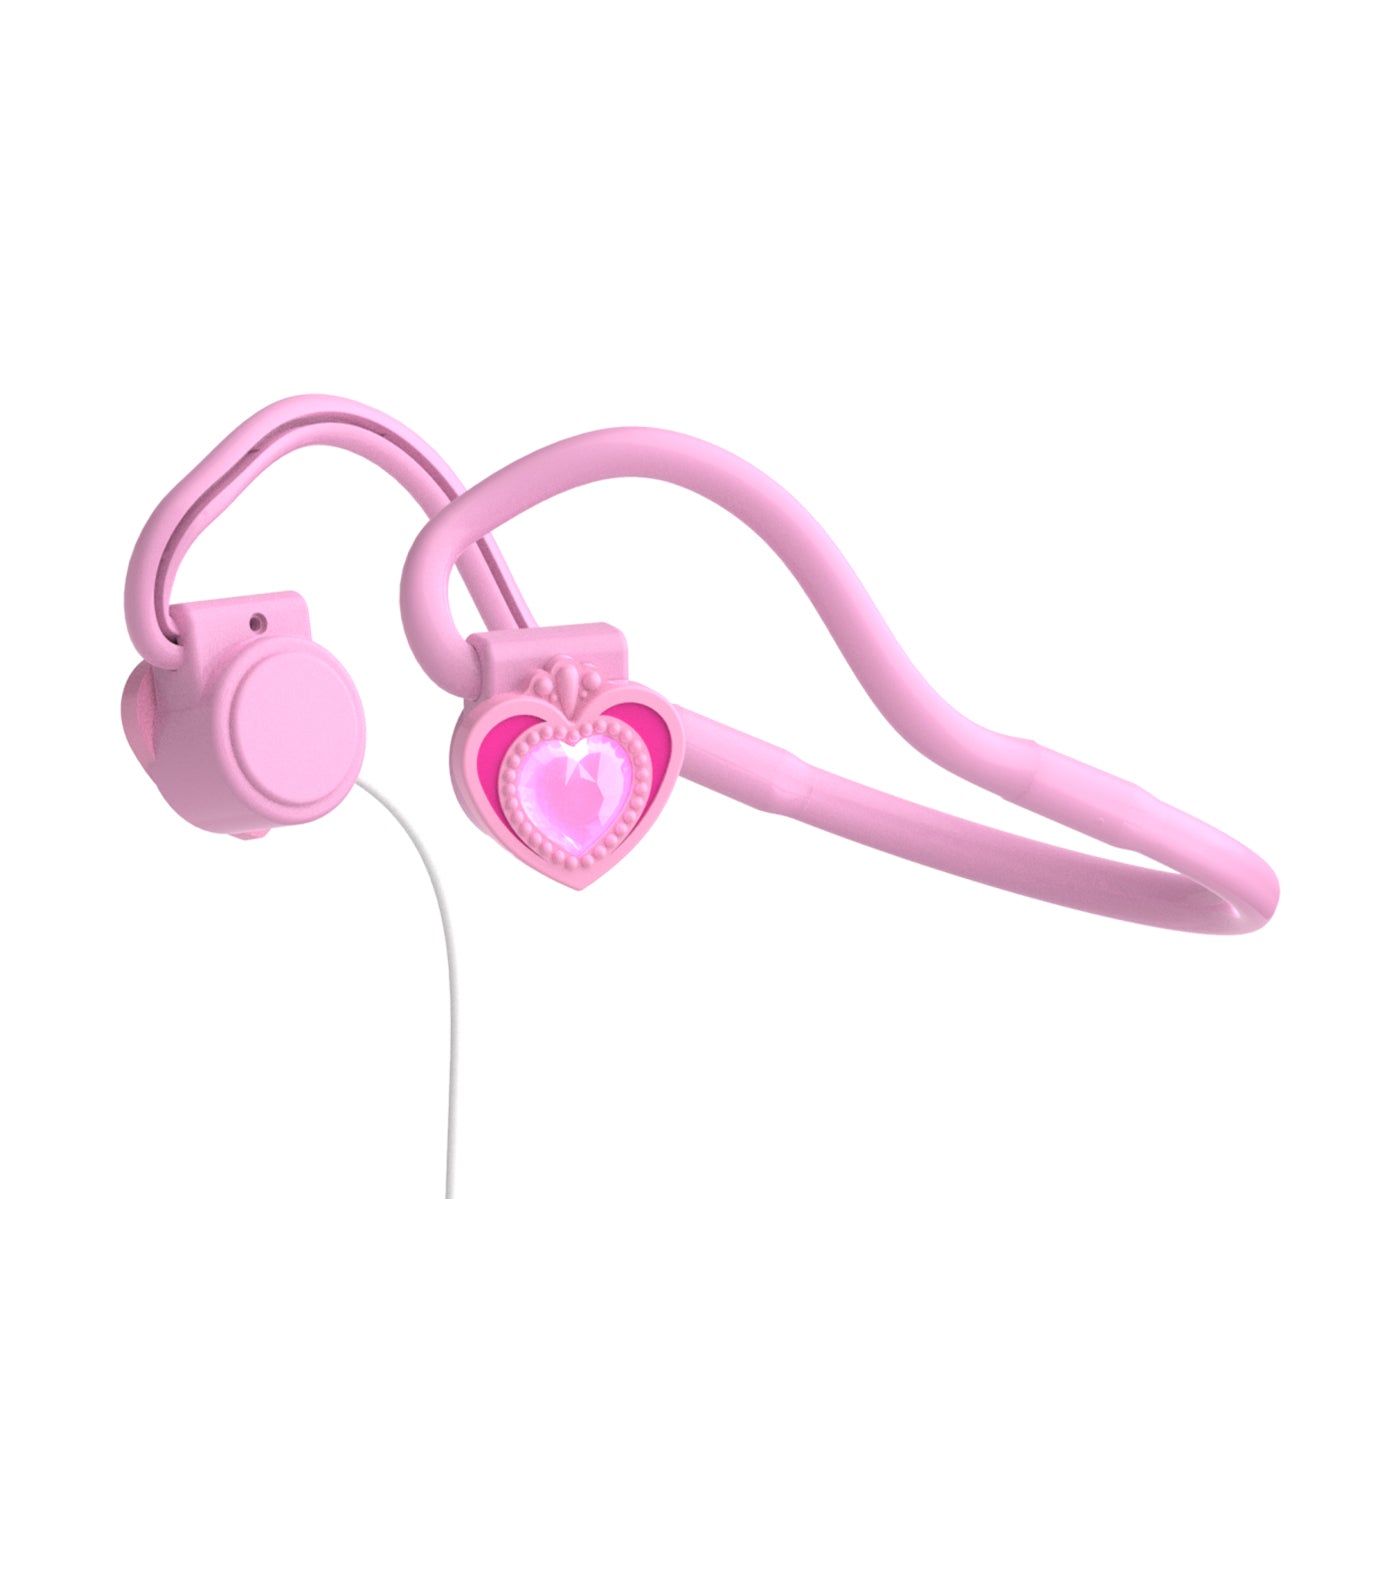 myfirst pink bone conduction headphones for kids 